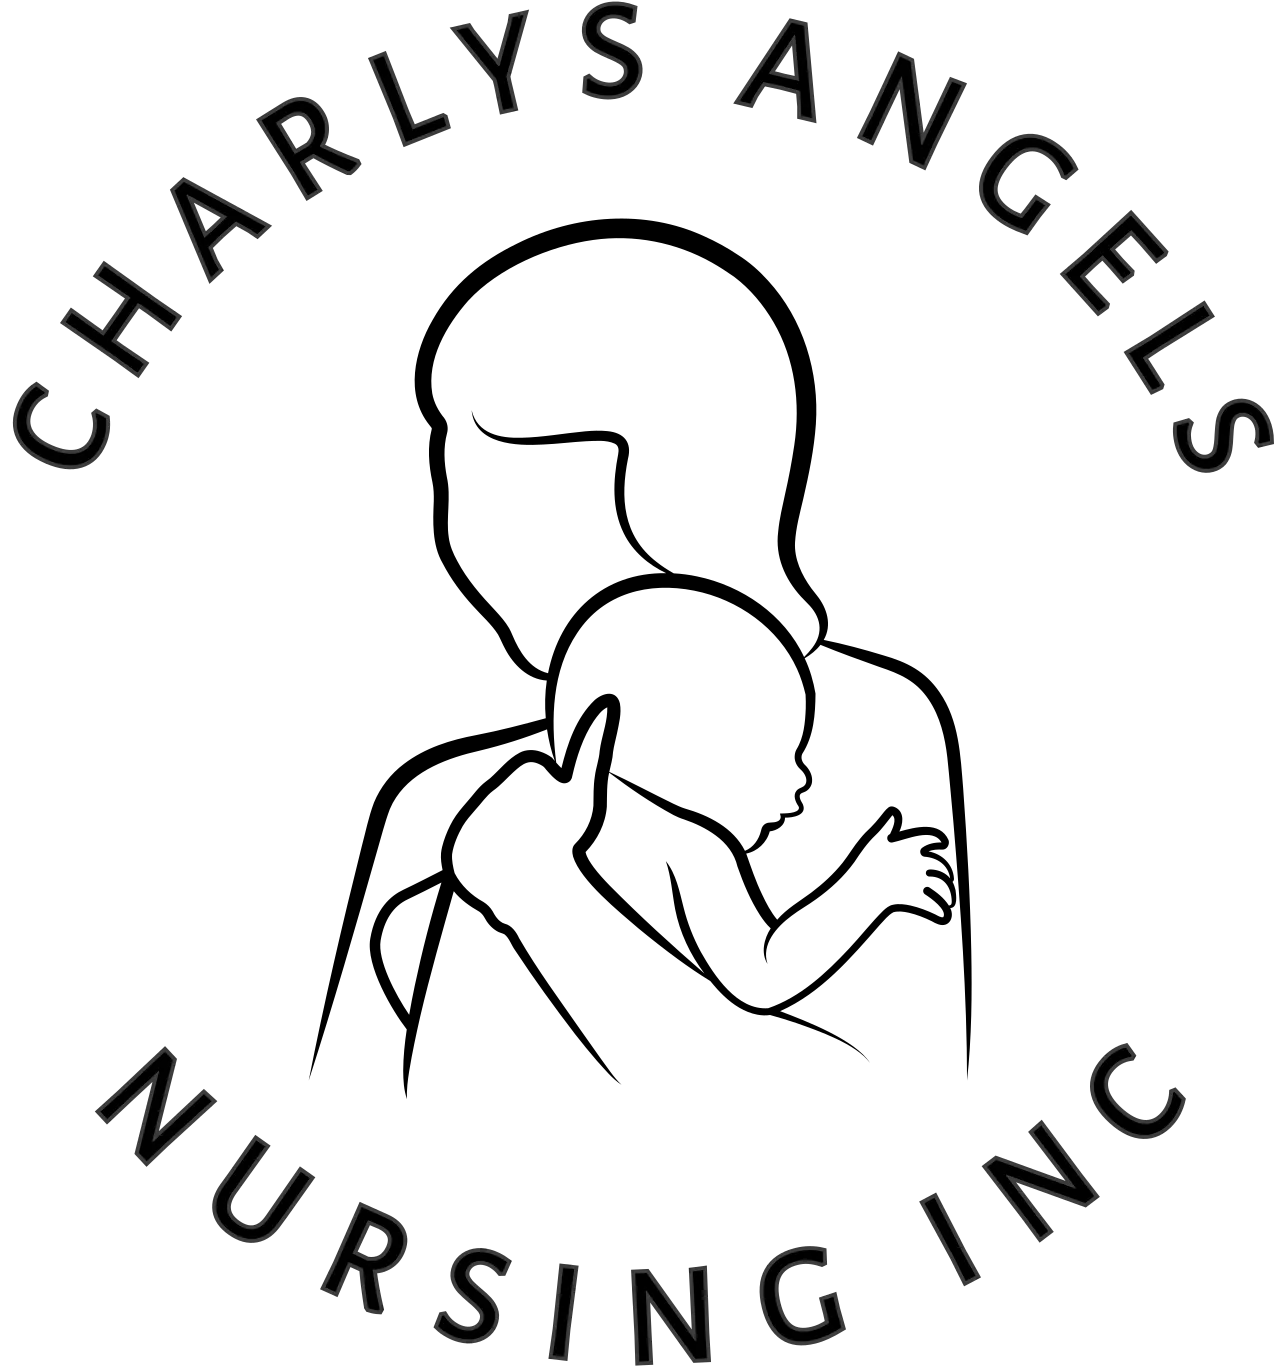 Charleys Angels Nursing